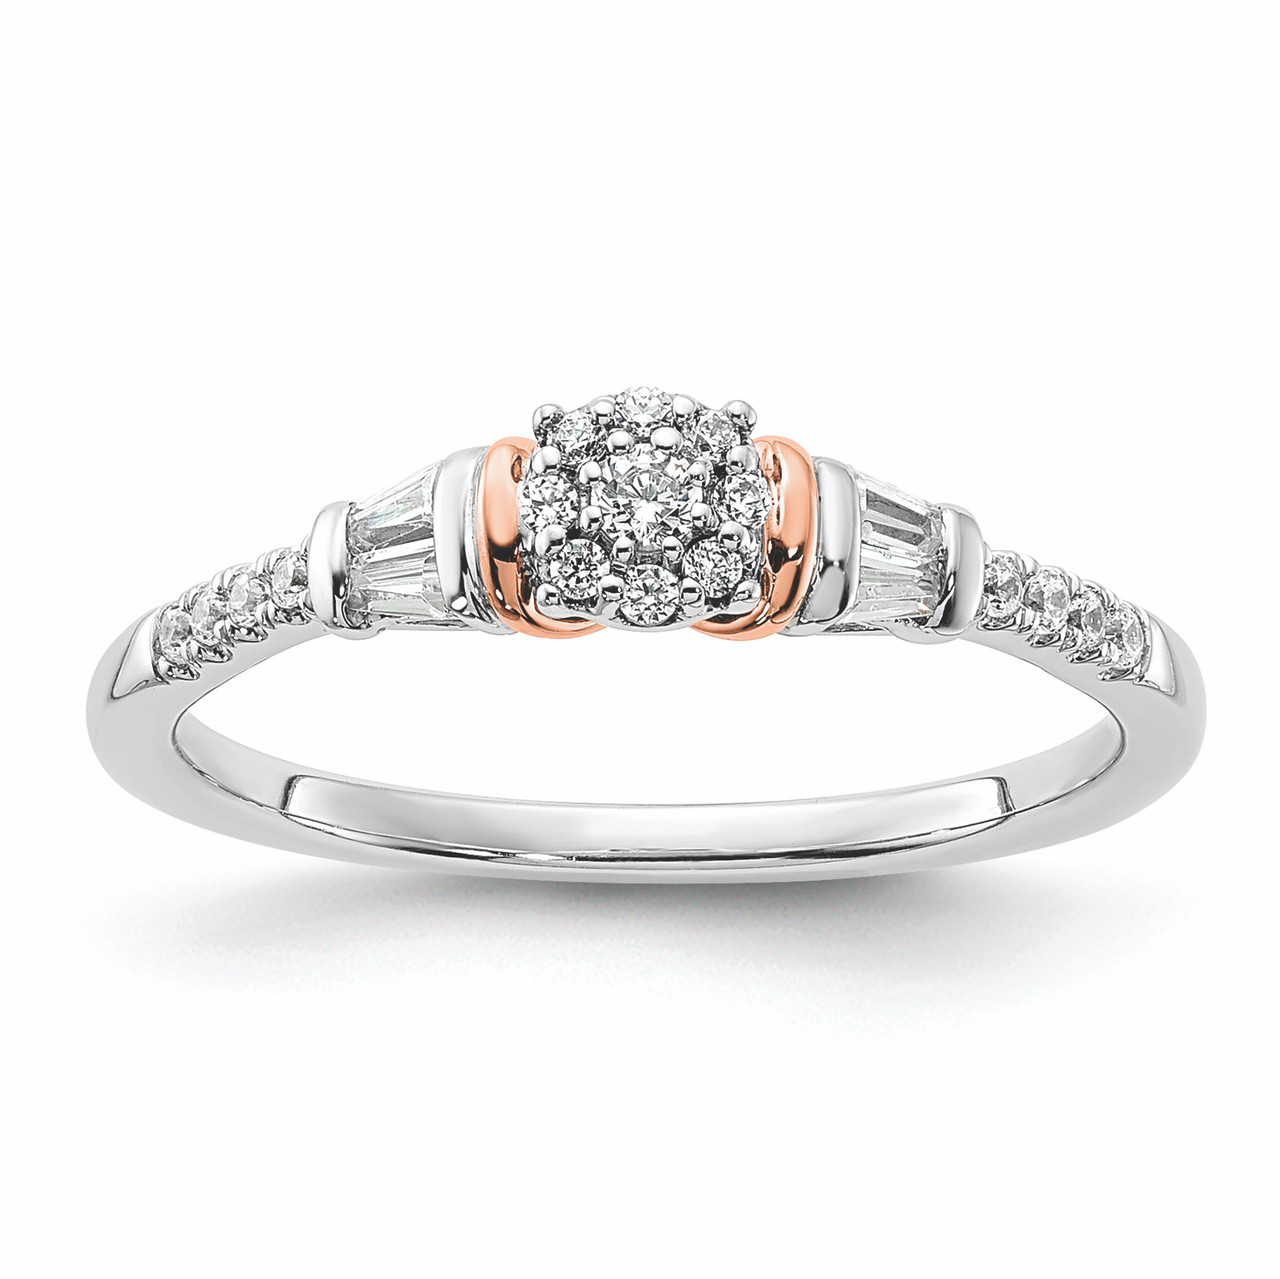 2.50 Carat Cushion Diamond Ring3 Stone Cushion Diamond Ring | Etsy |  Cushion cut diamond engagement ring, Cushion cut diamonds, Engagement rings